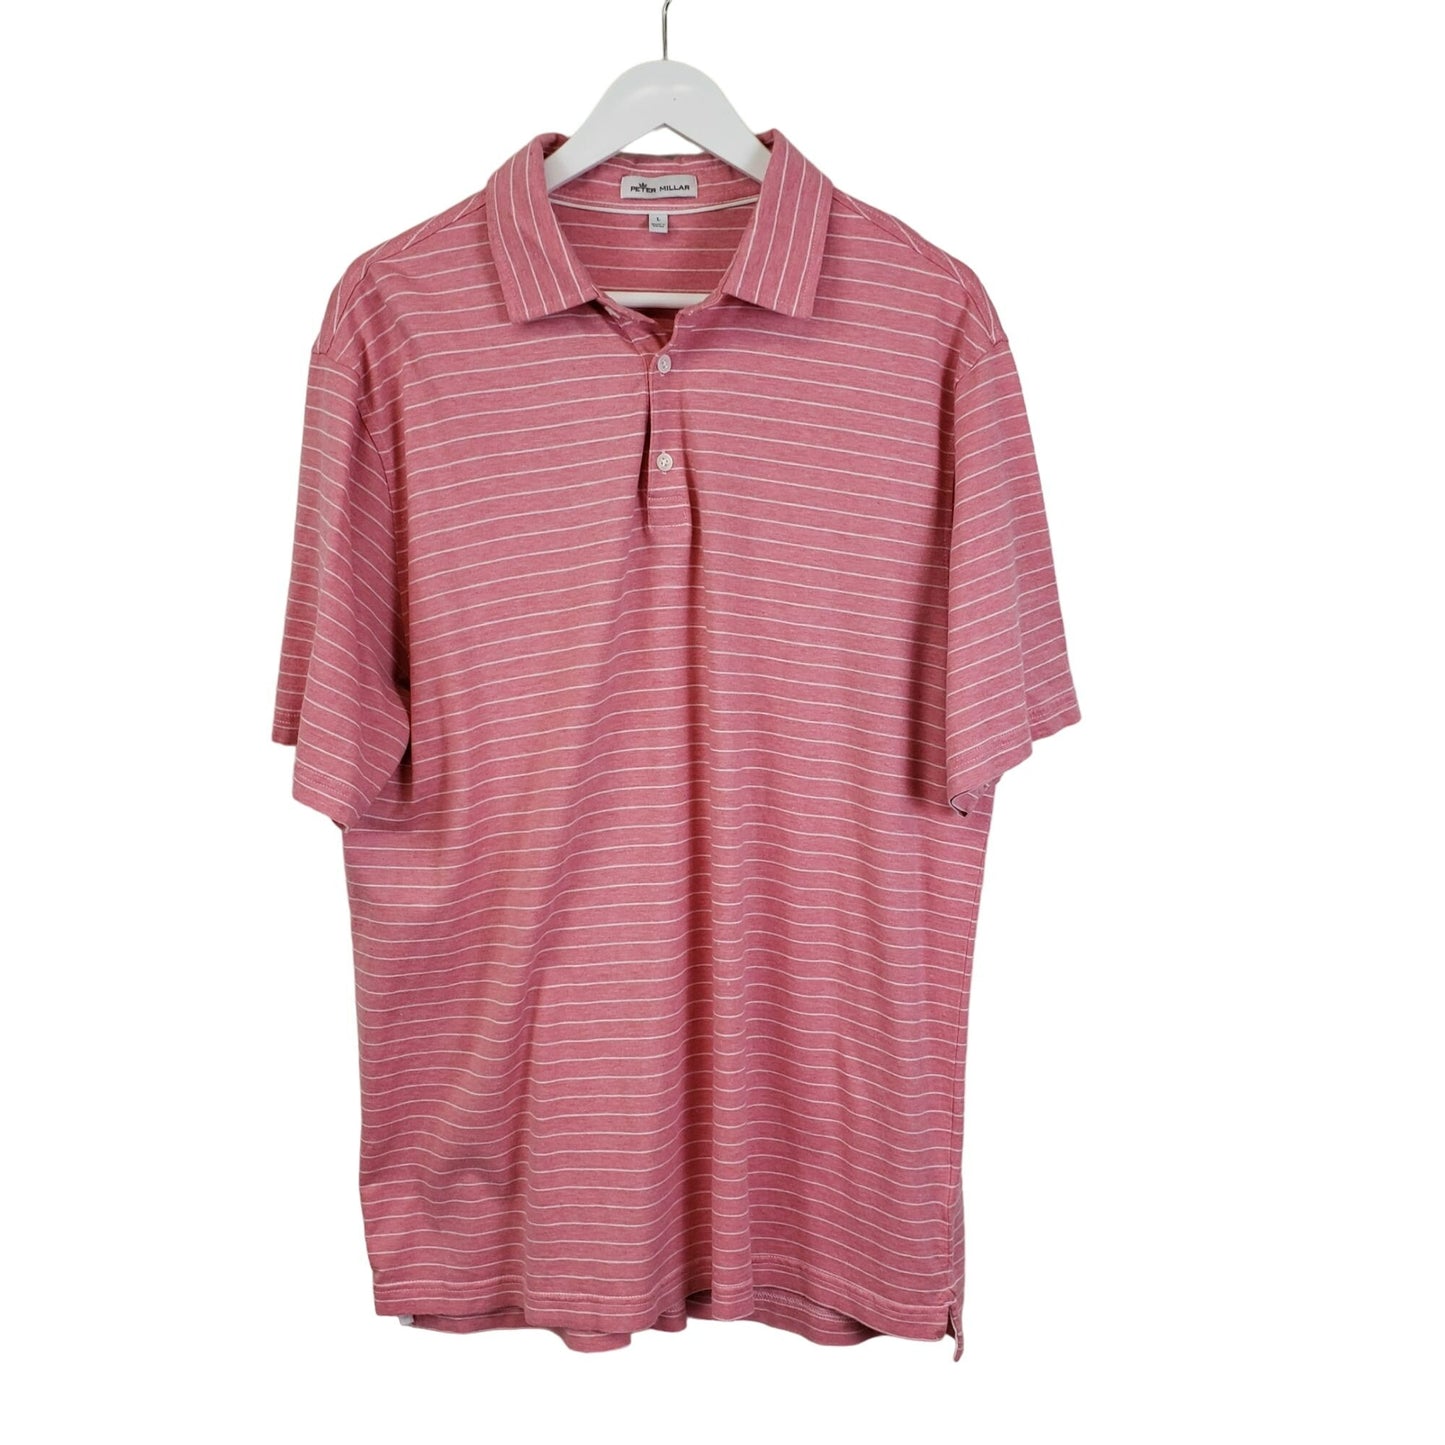 Peter Millar Linen Blend Striped Polo Shirt Size Large